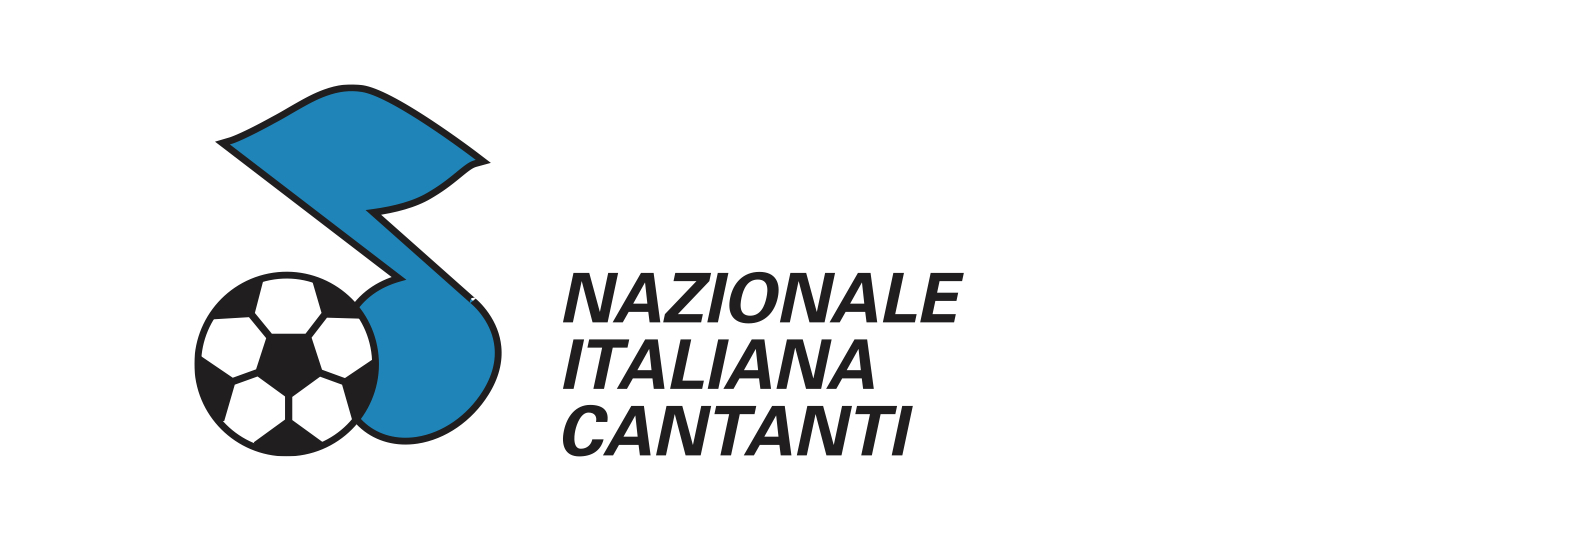 Logo_Nazionale_Italiana_Cantanti_2.jpg